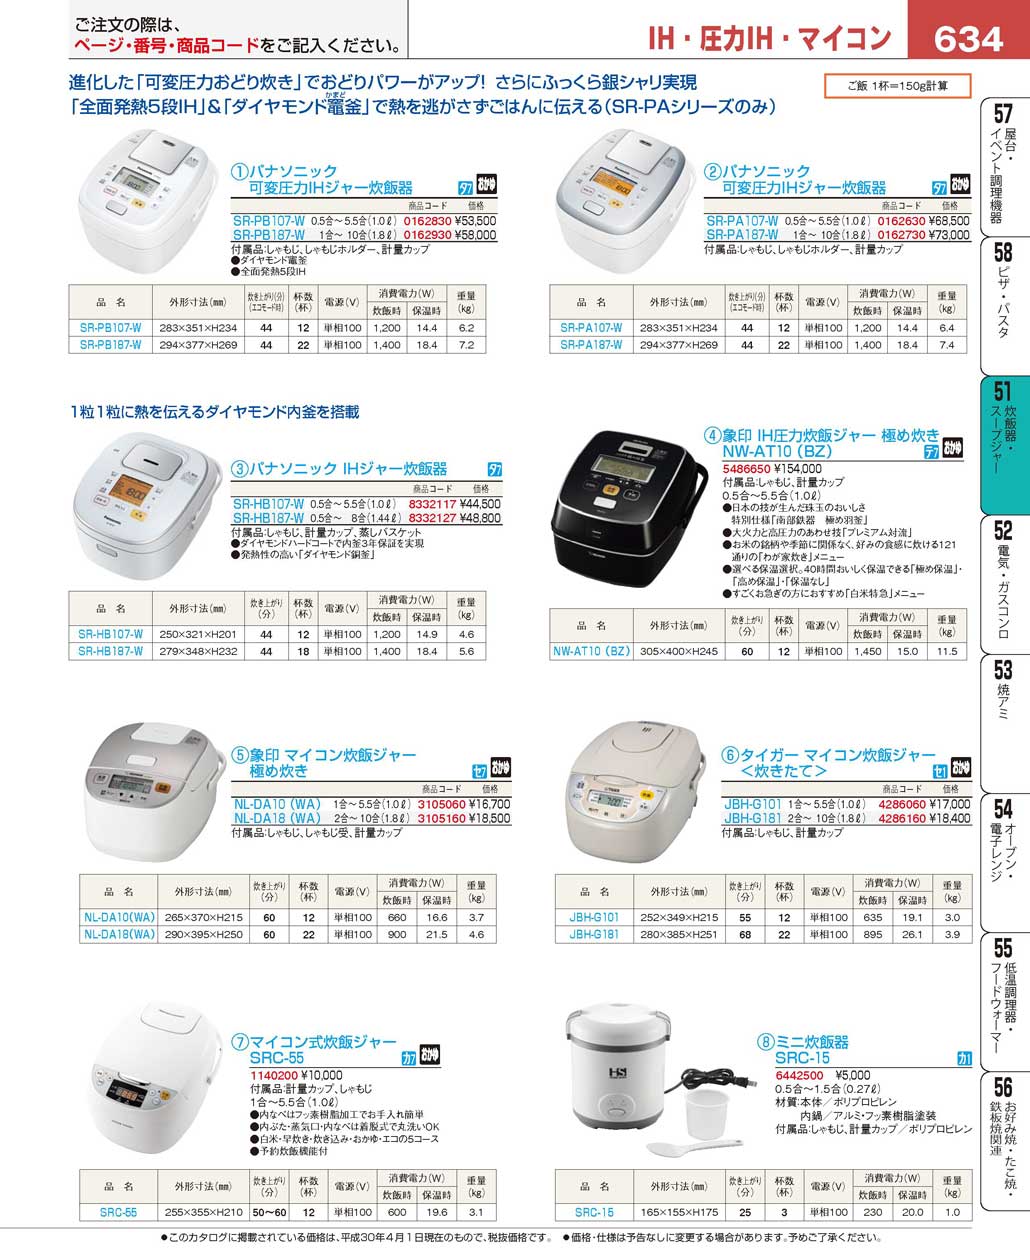 新品 象印 炊飯器 NL-DA18-WA - kasasaku.eco.coocan.jp